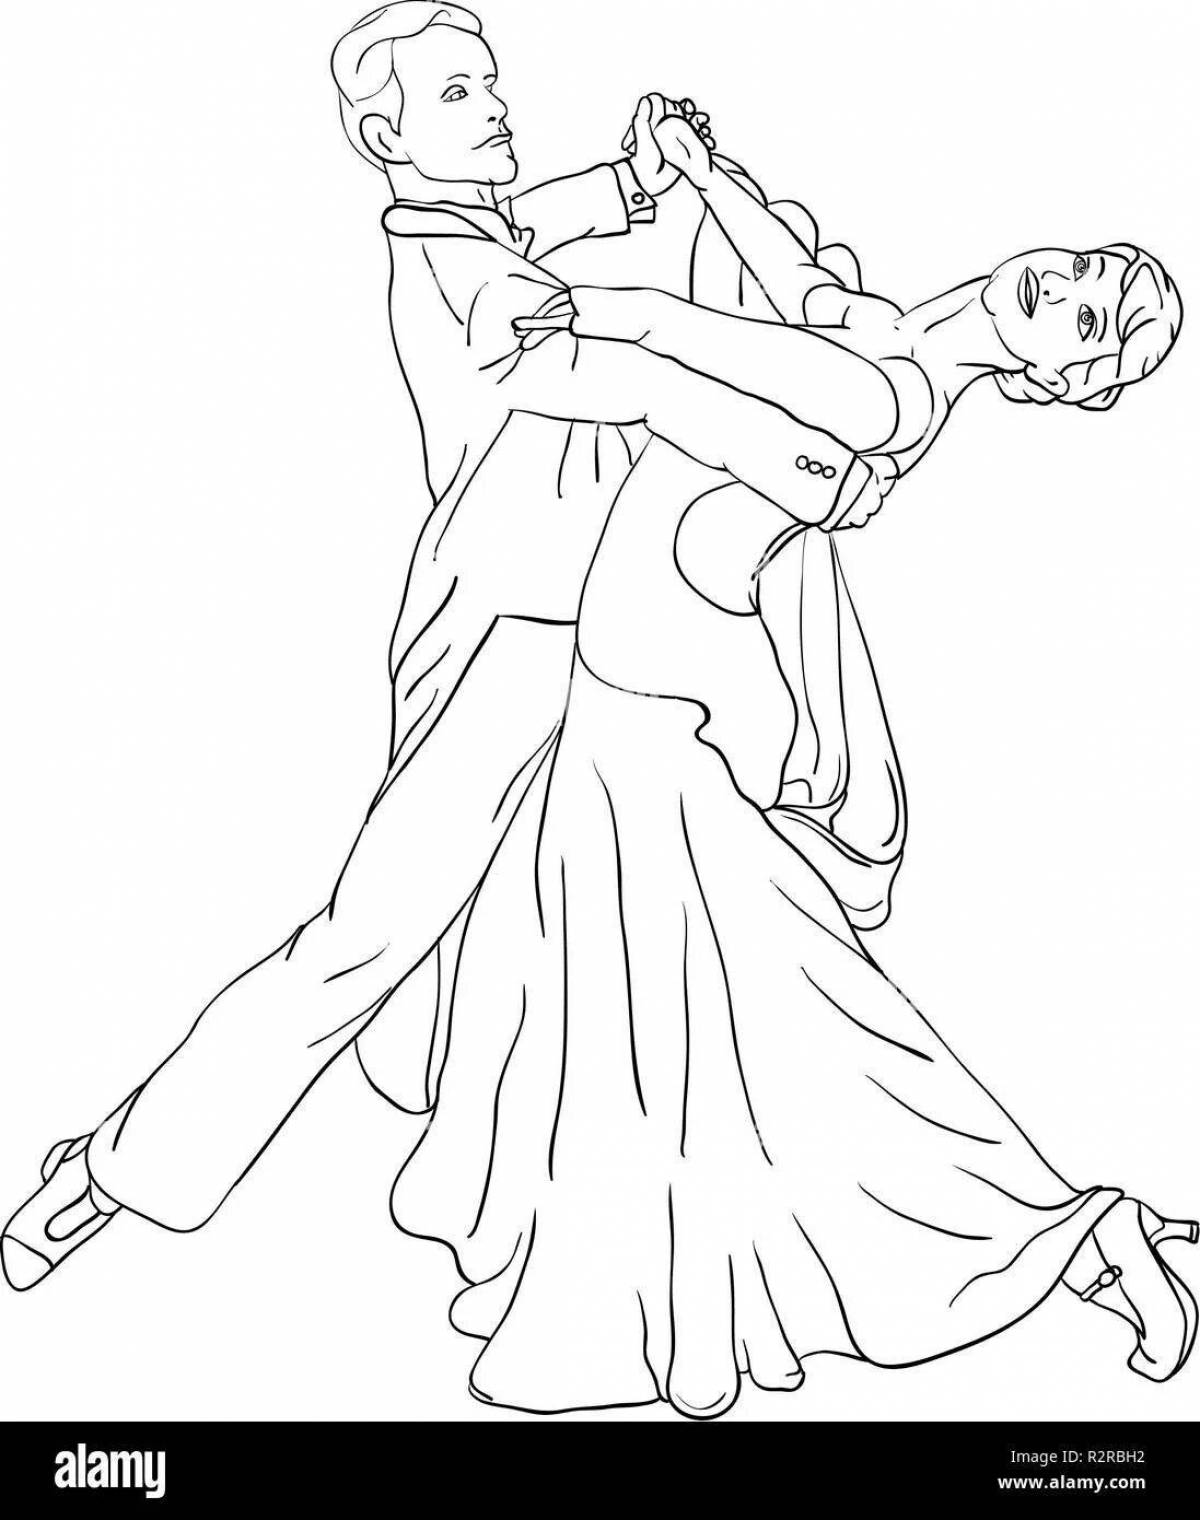 Festive waltz coloring page